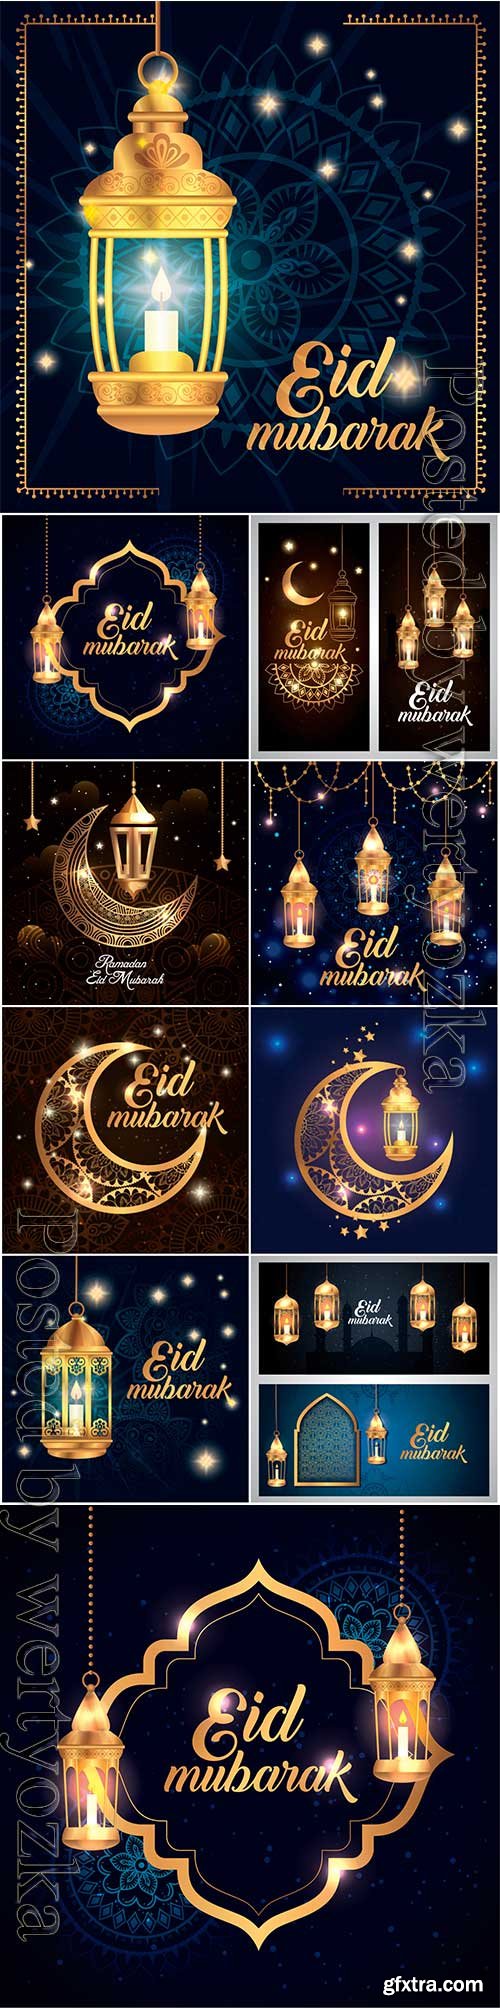 Eid mubarak poster with lantern hanging and decoration vector illustration